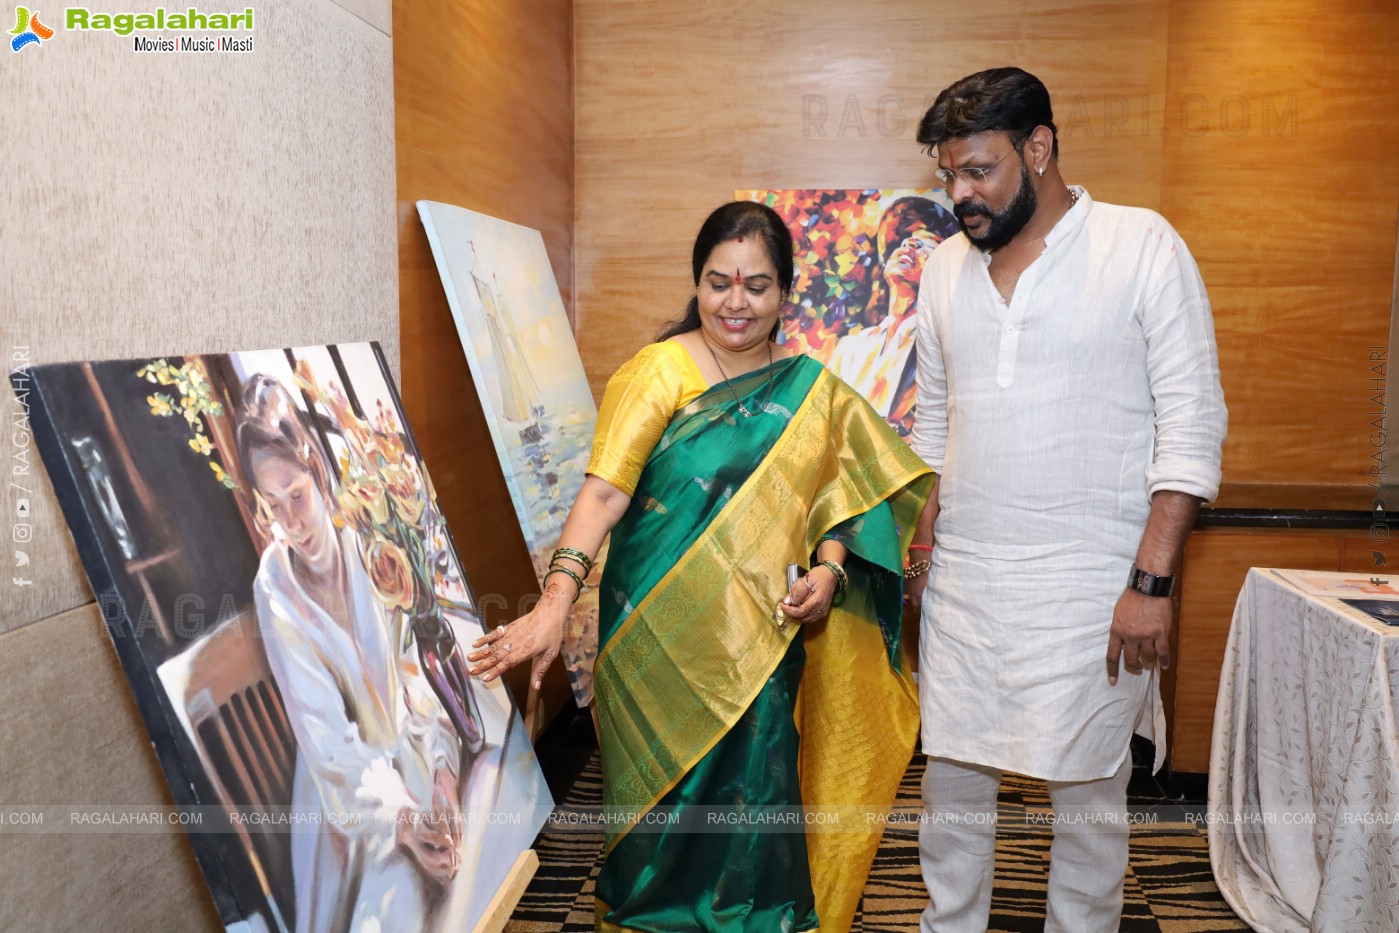 Inauguration of Charity Art Show Event at Taj Vivanta, Hyderabad